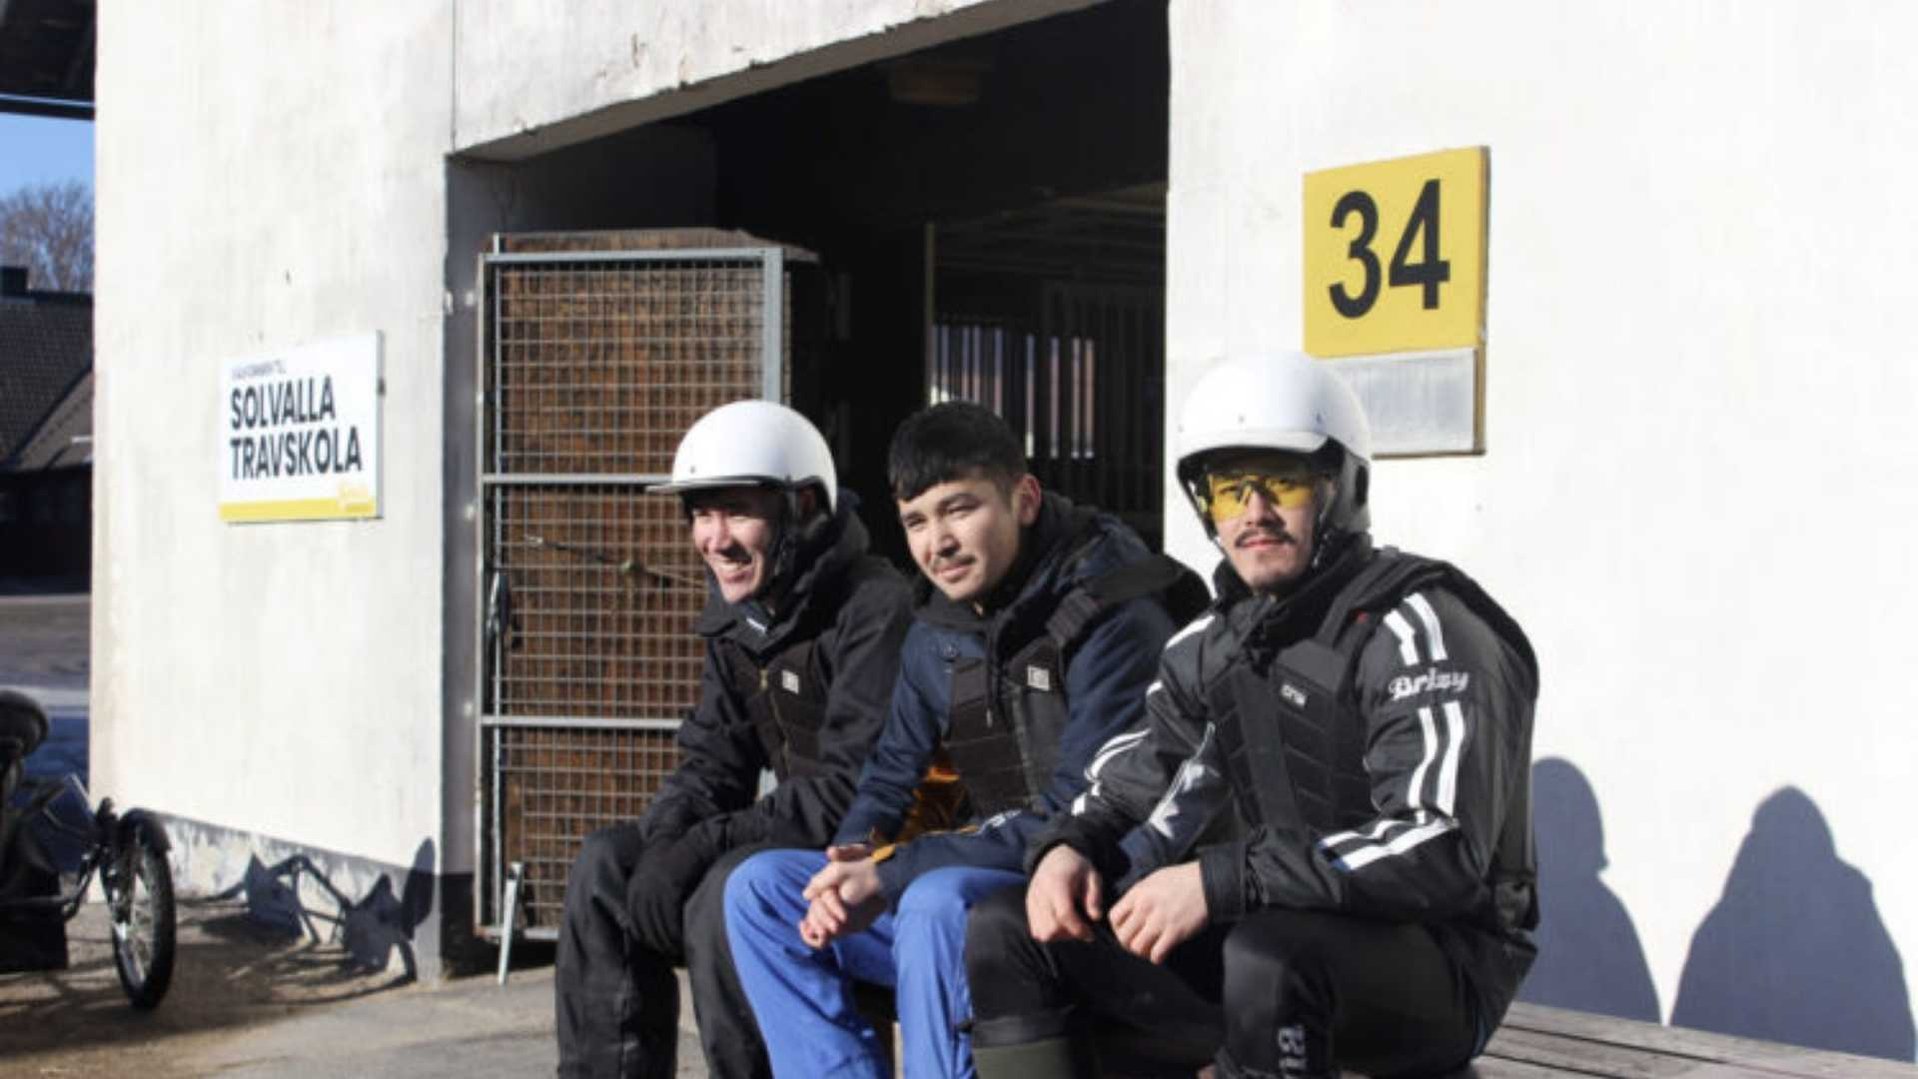 Mahdi, Murteza and Meysam during Travkraft project on Solvalla in Sweden